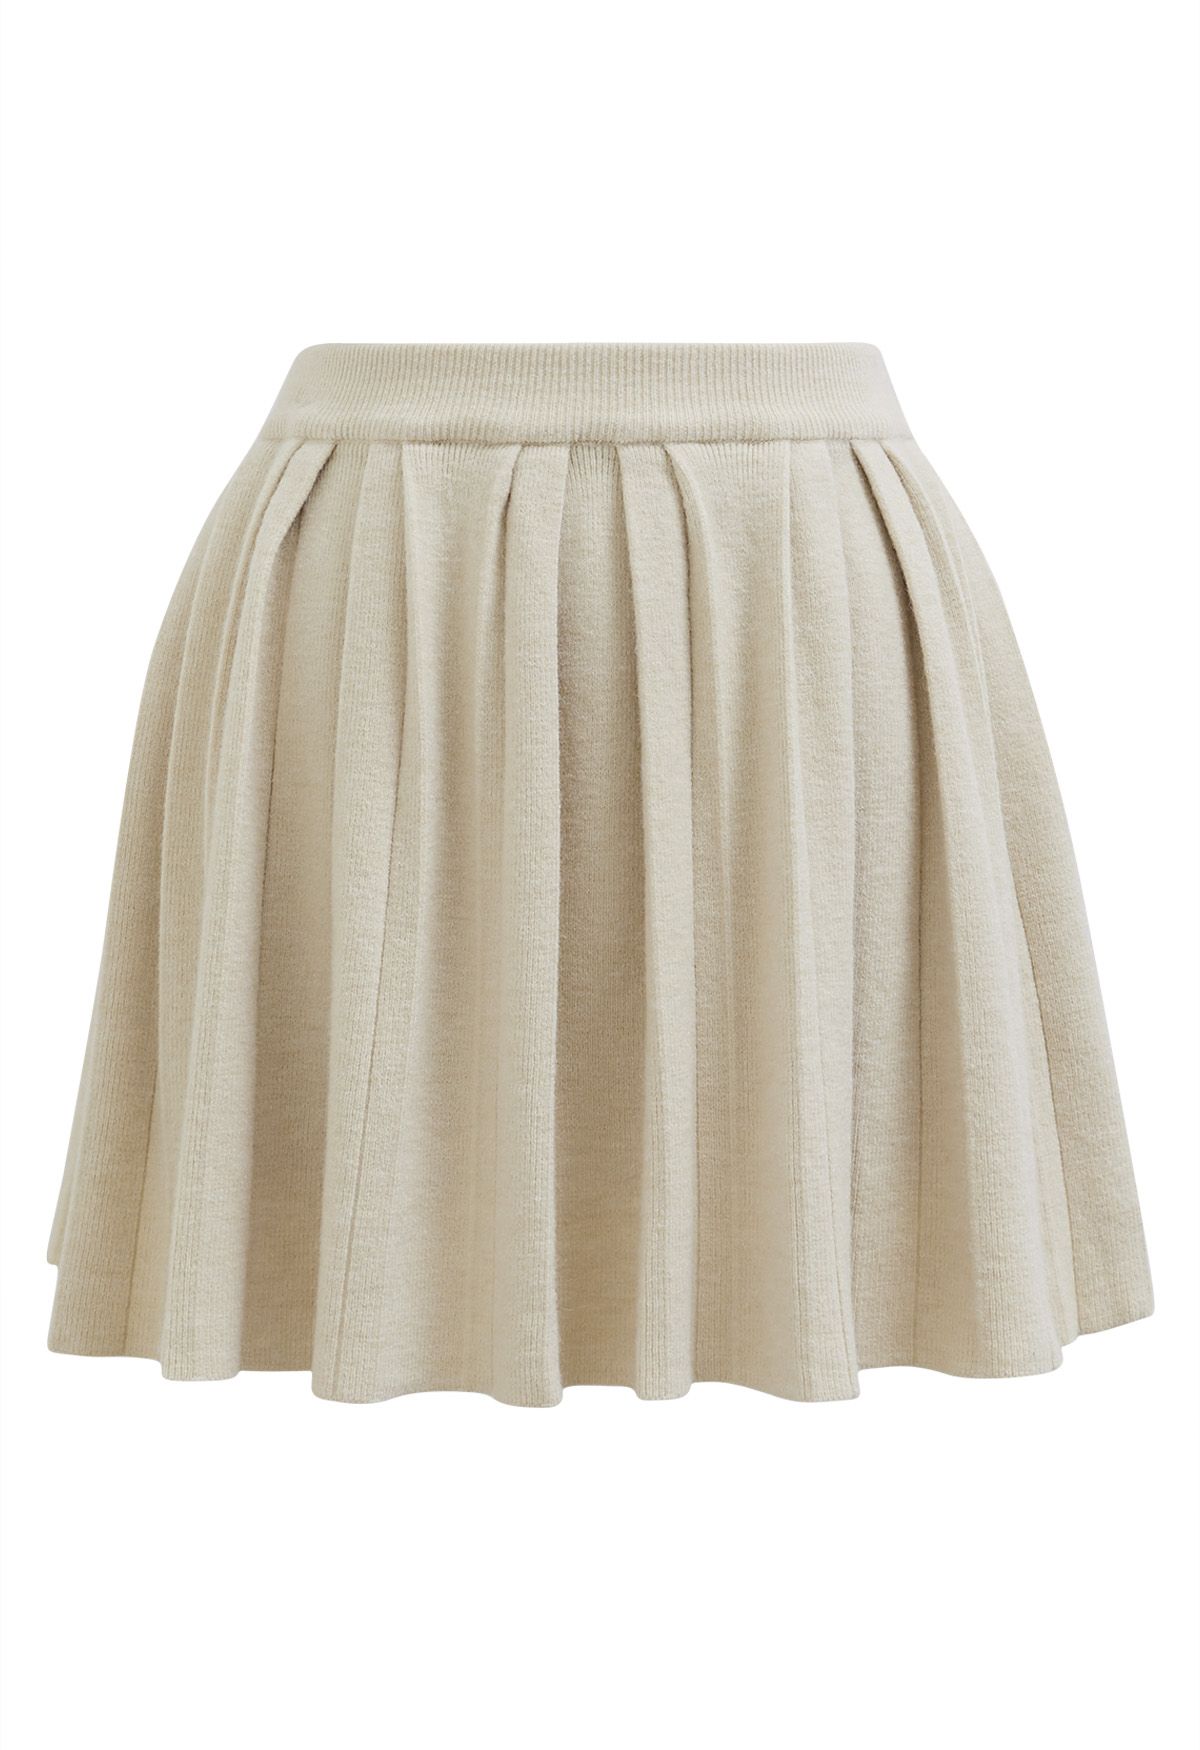 Elastic Waist Pleated Mini Skirt in Cream - Retro, Indie and Unique Fashion